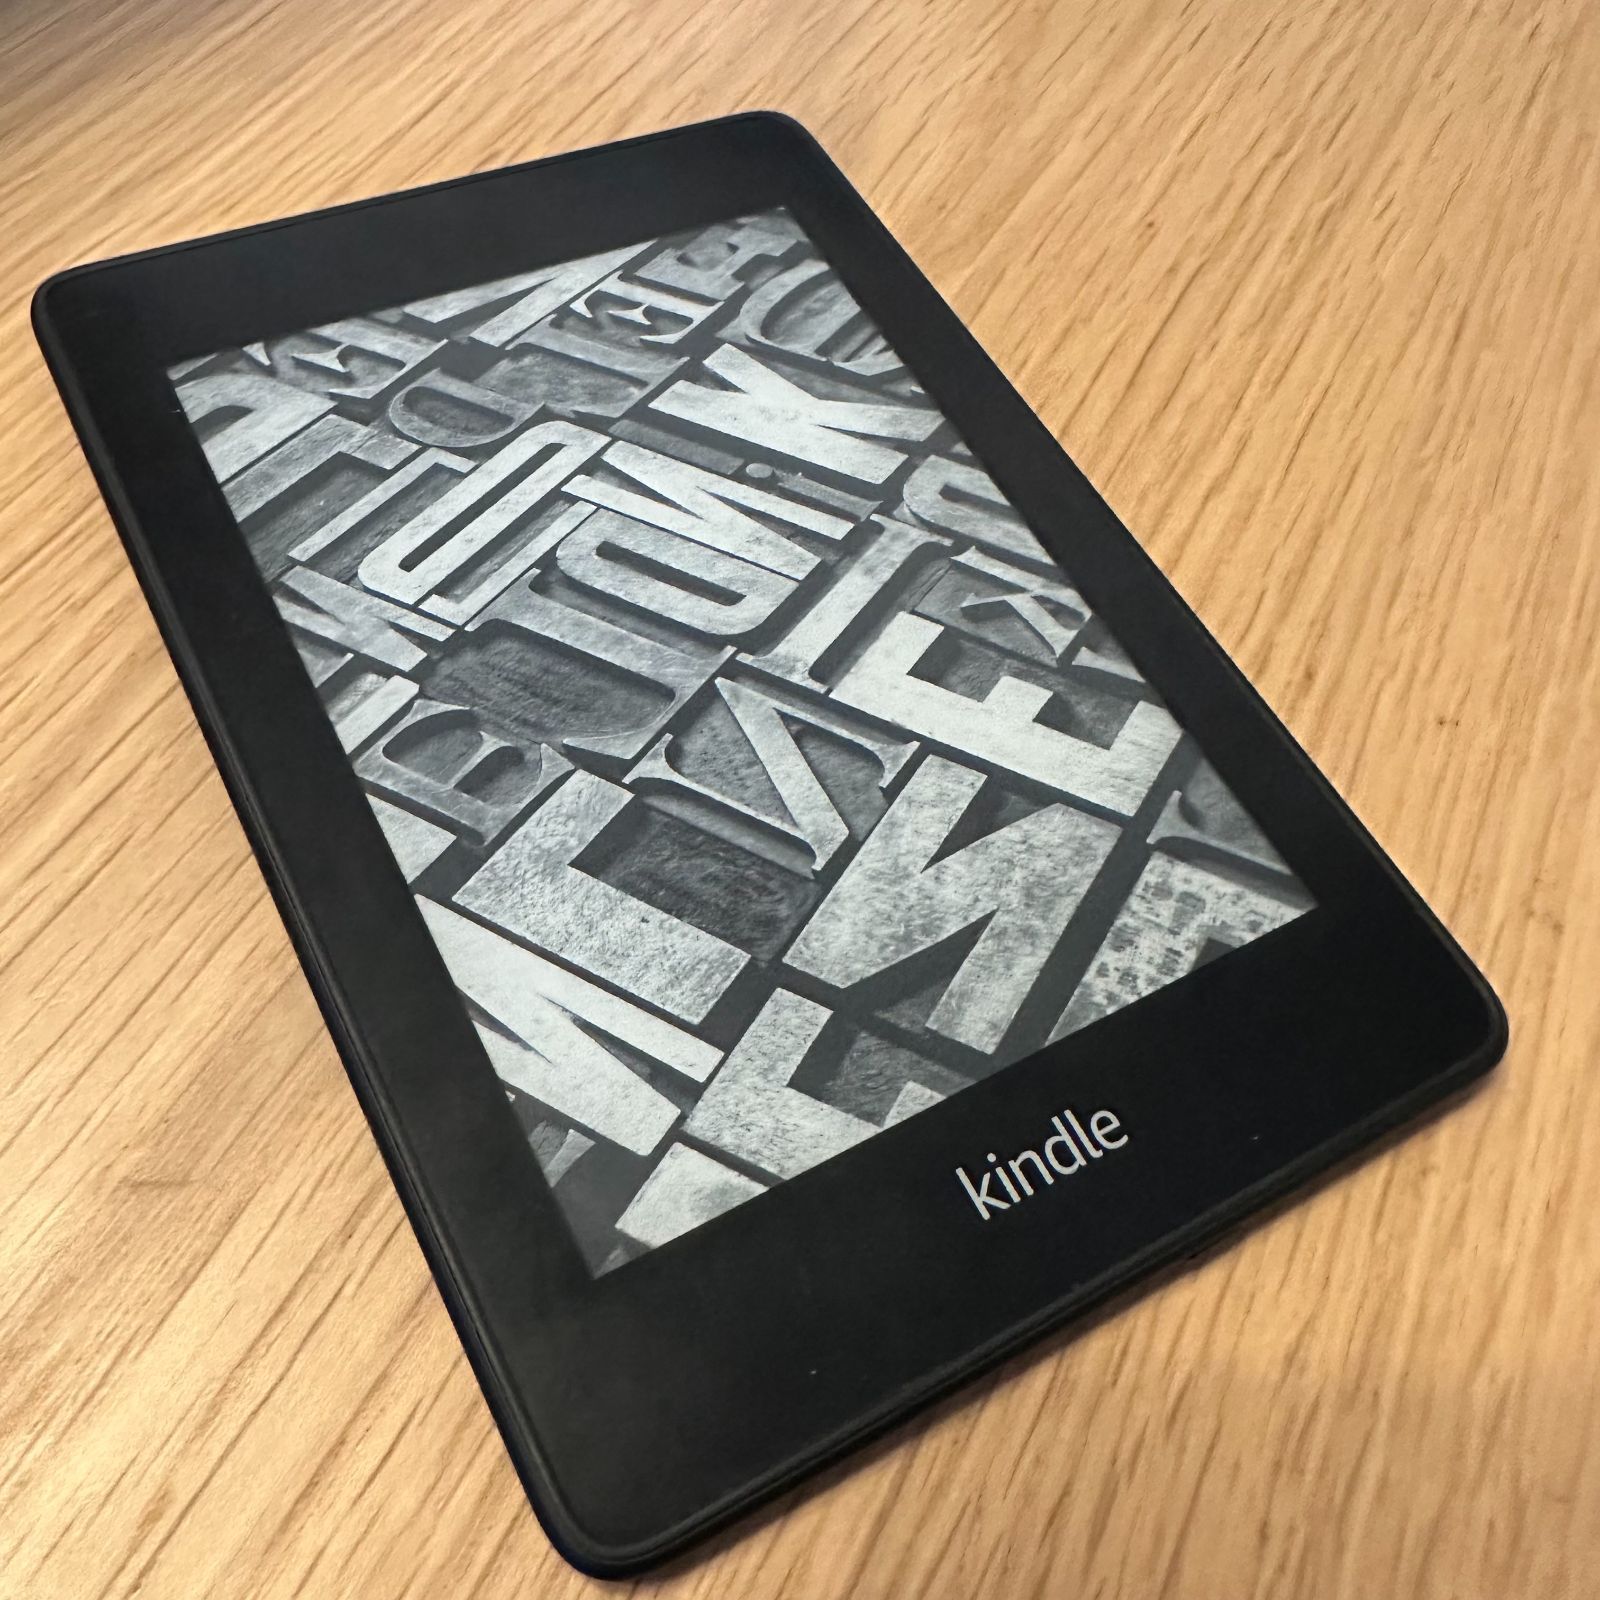 KindlePaperwhite第10世代 防水機能搭載 32GB ブラック-